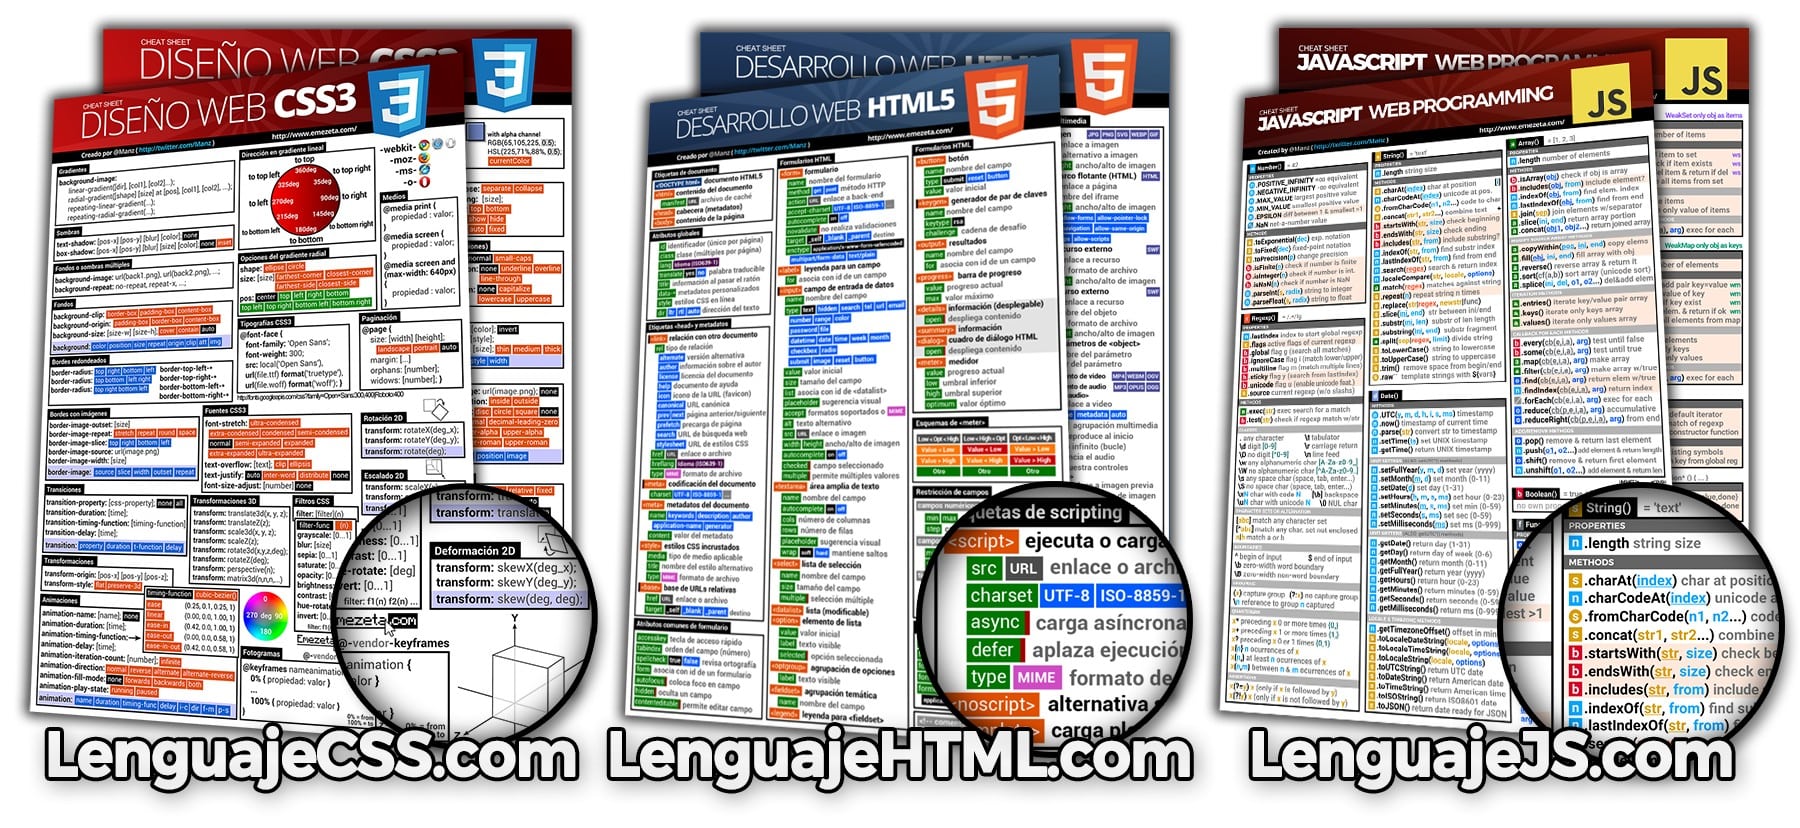 Chuletas de HTML5, CSS3 y Javascript